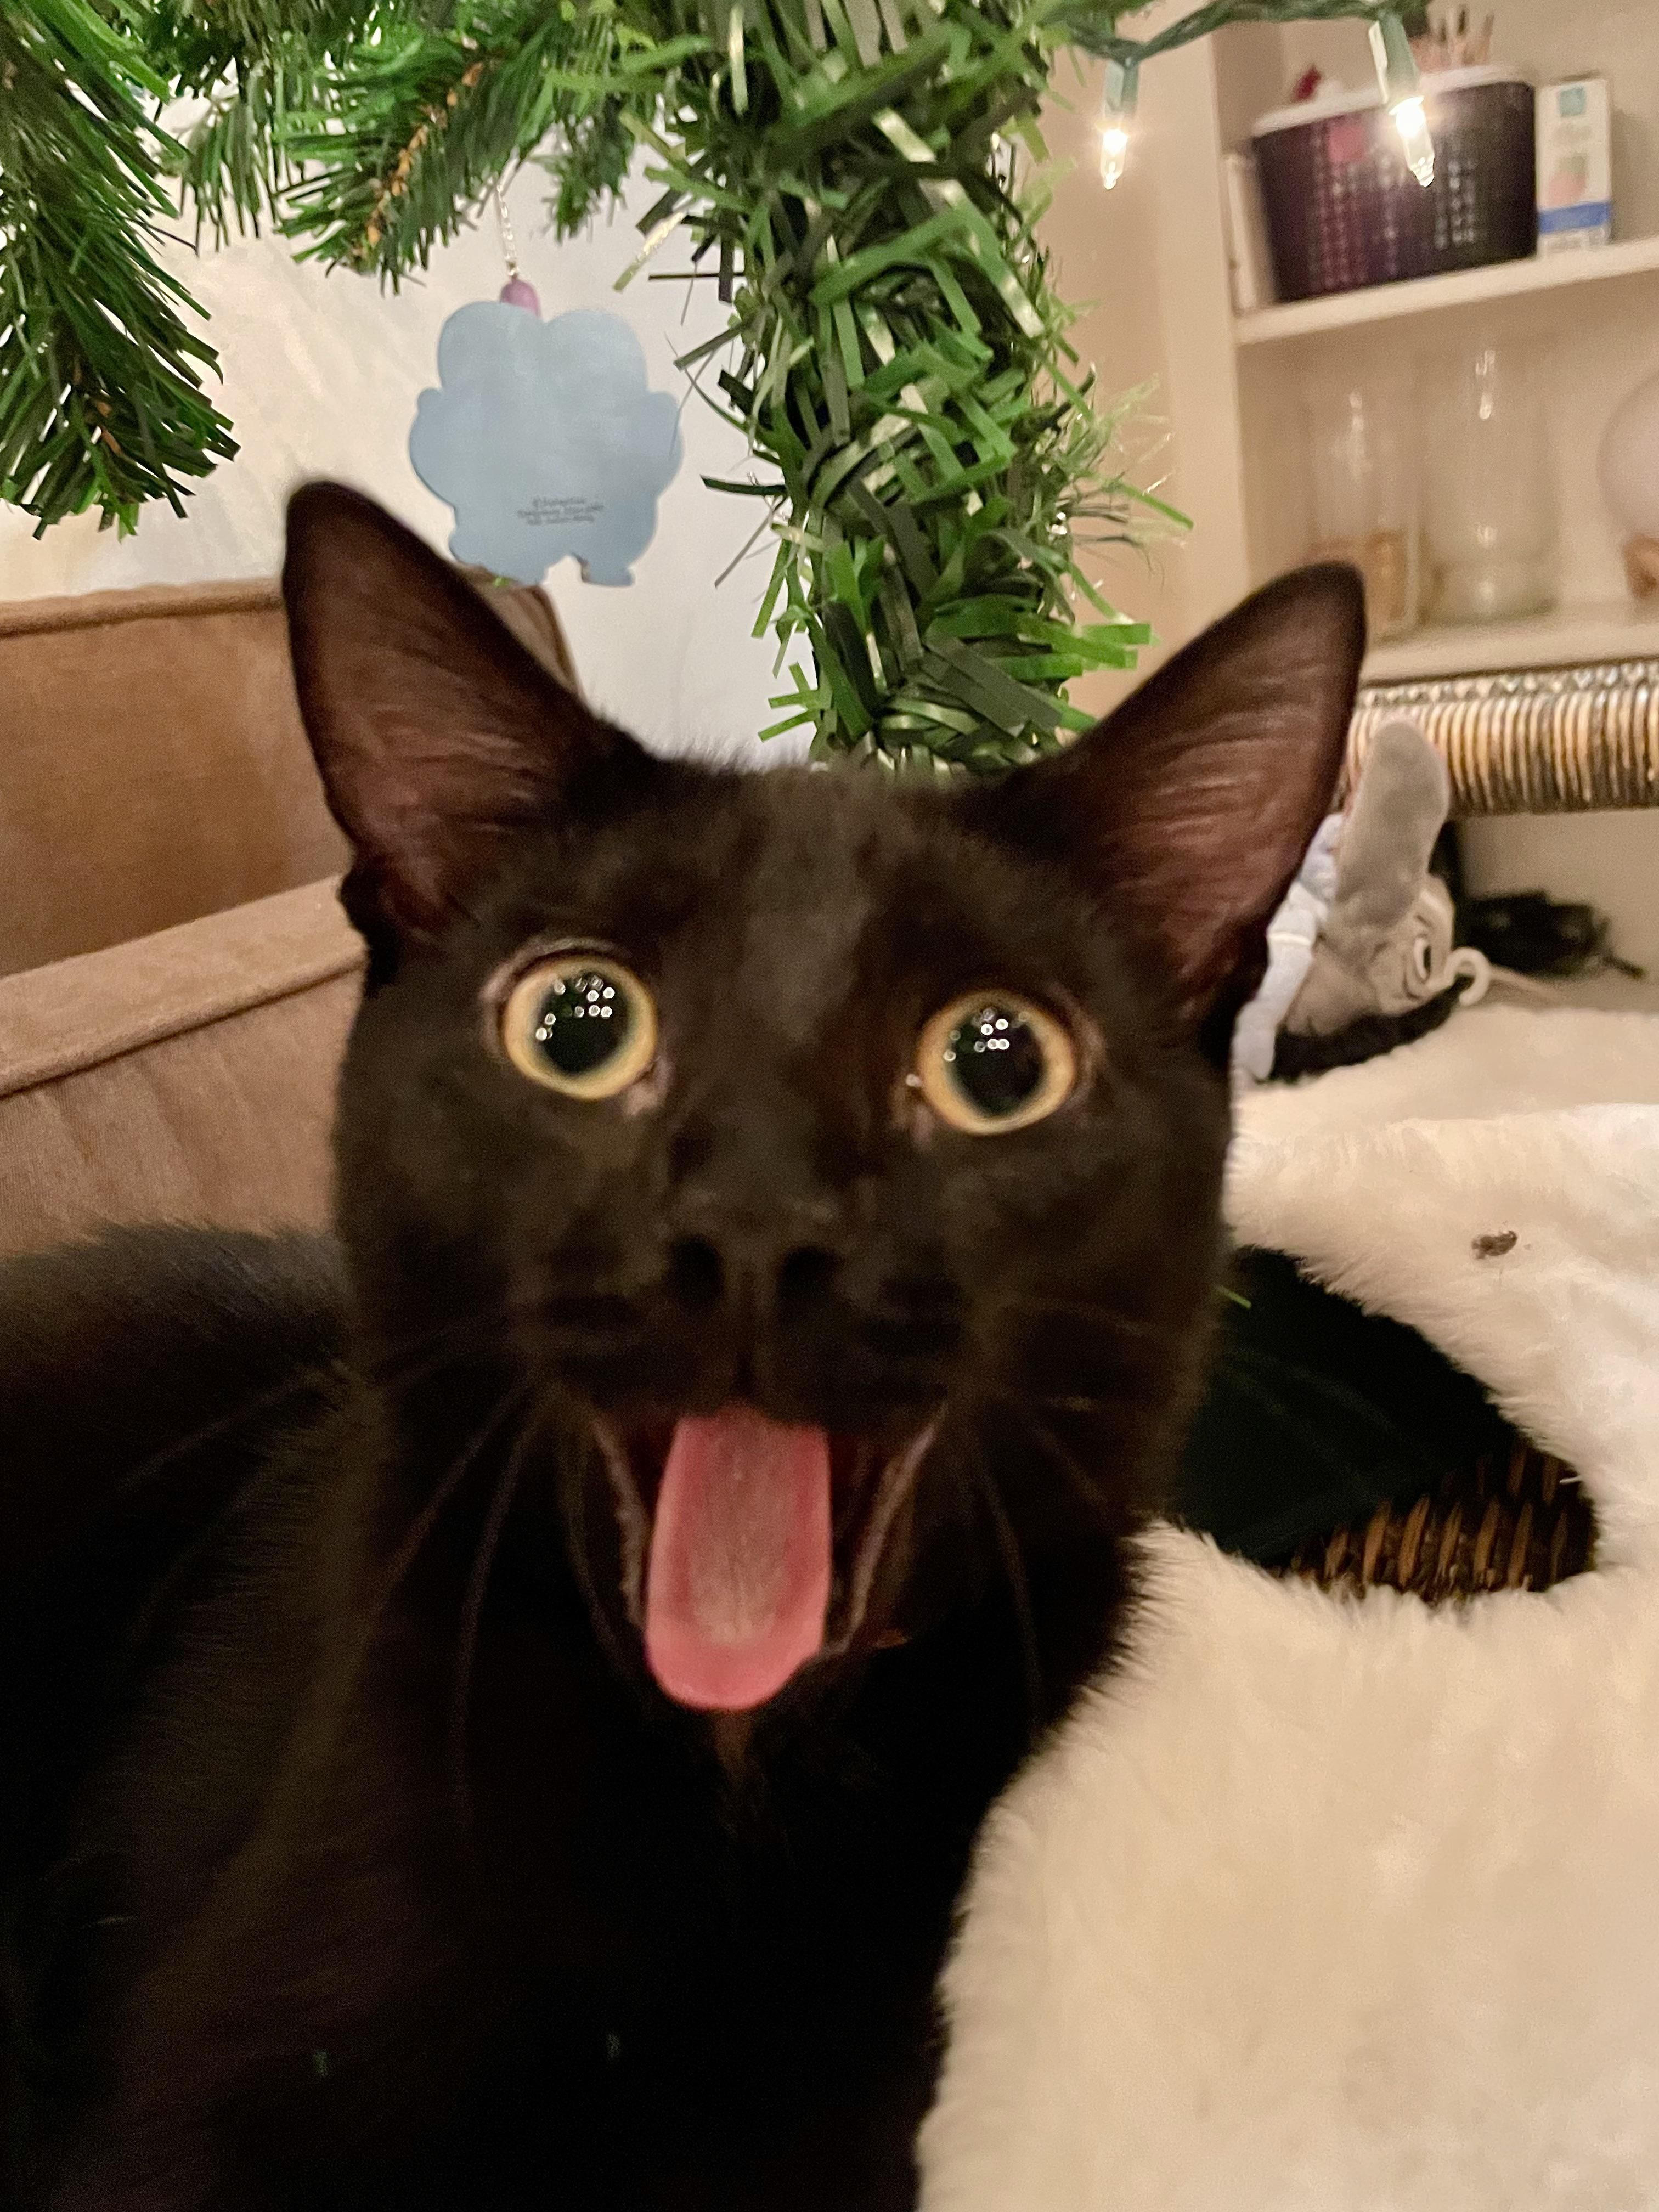 Caught my cat mid-yawn